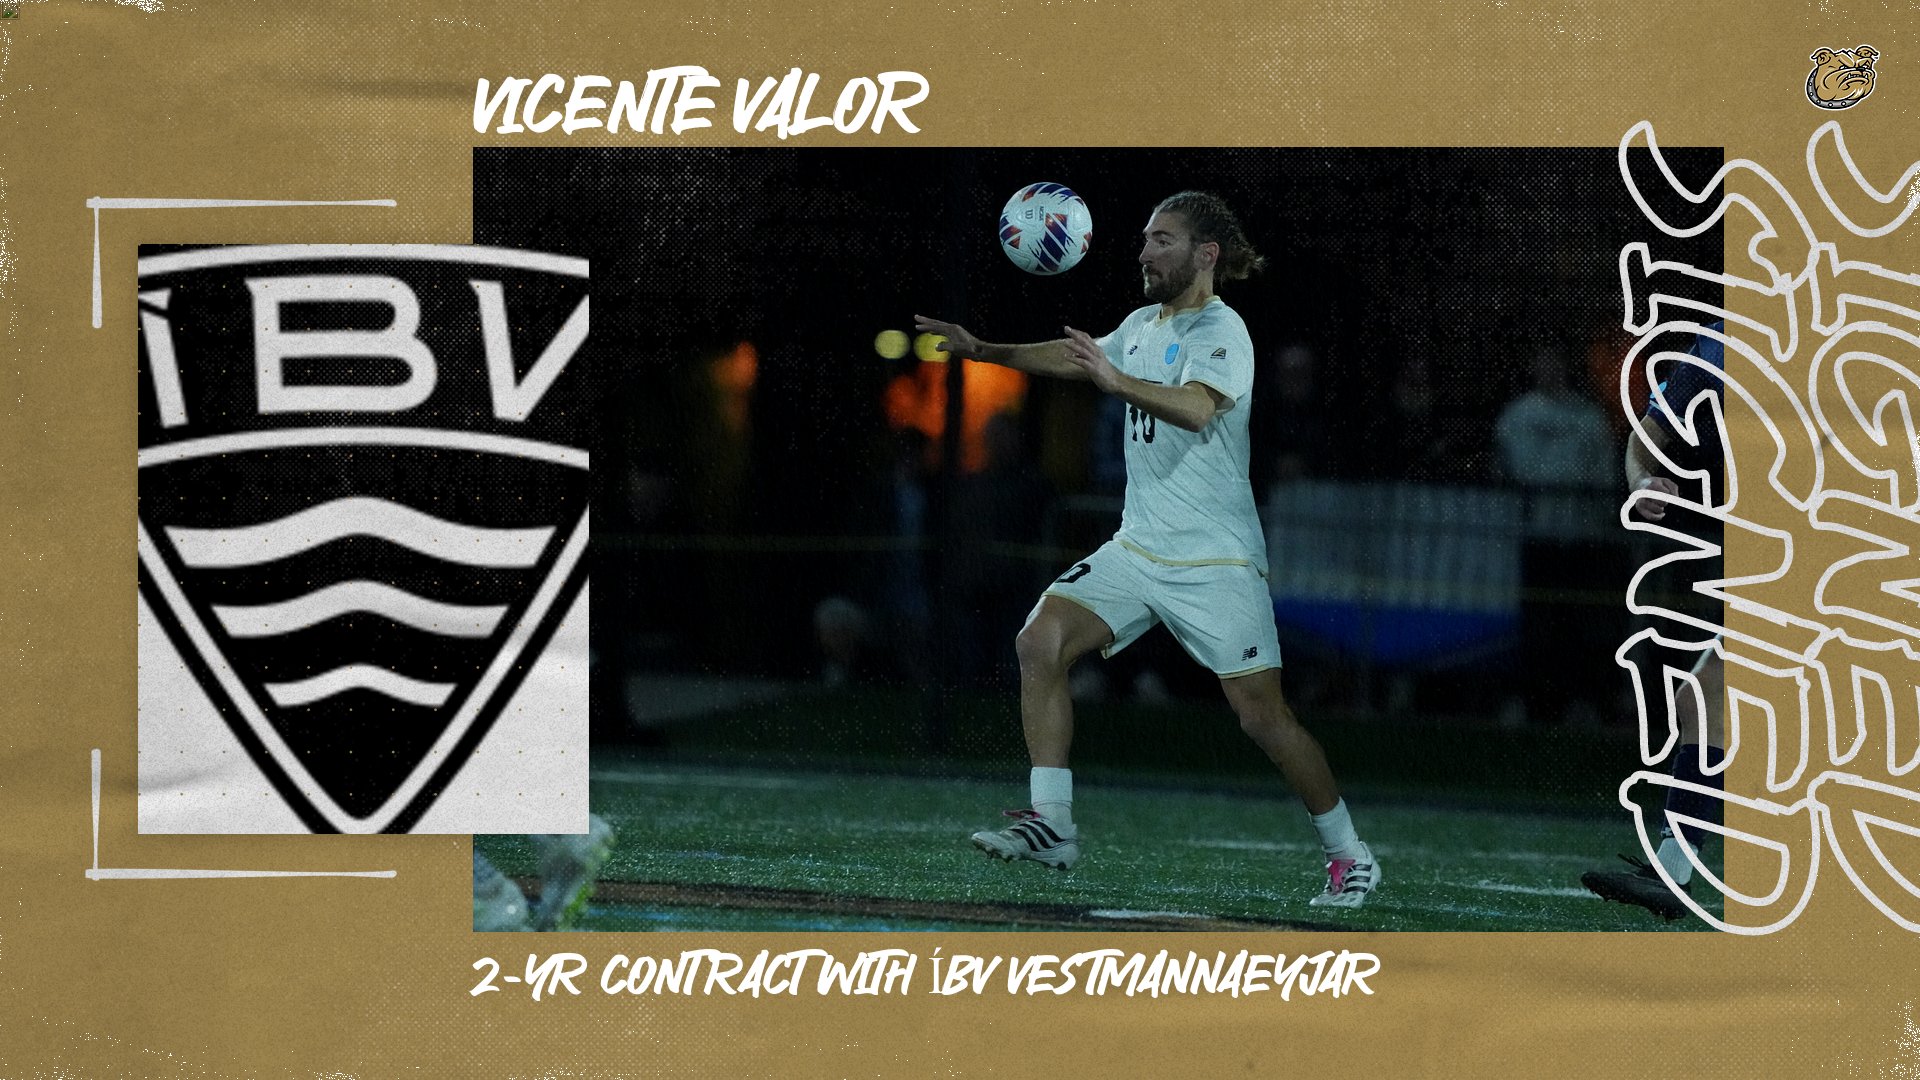 Valor signs with Icelandic side &Iacute;BV Vestmannaeyjar